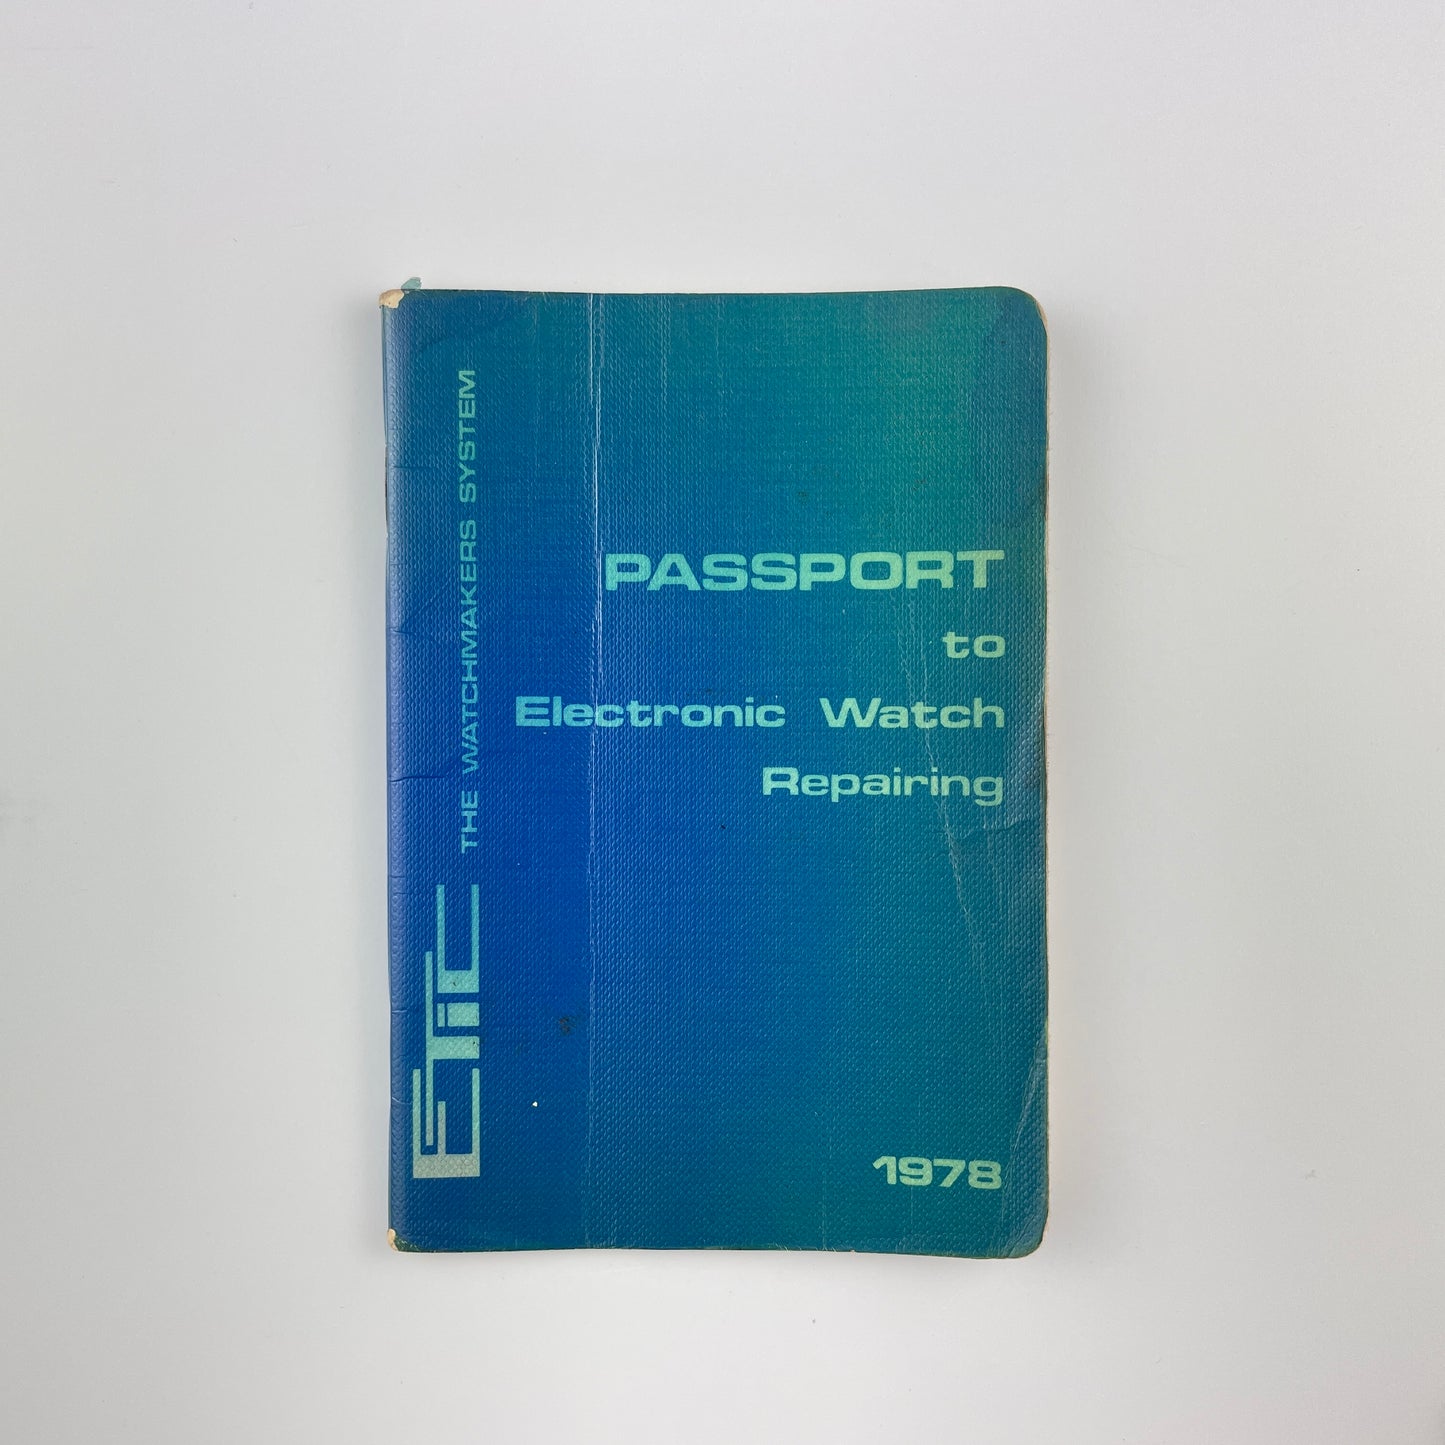 Passport to Electronic Watch Repairing